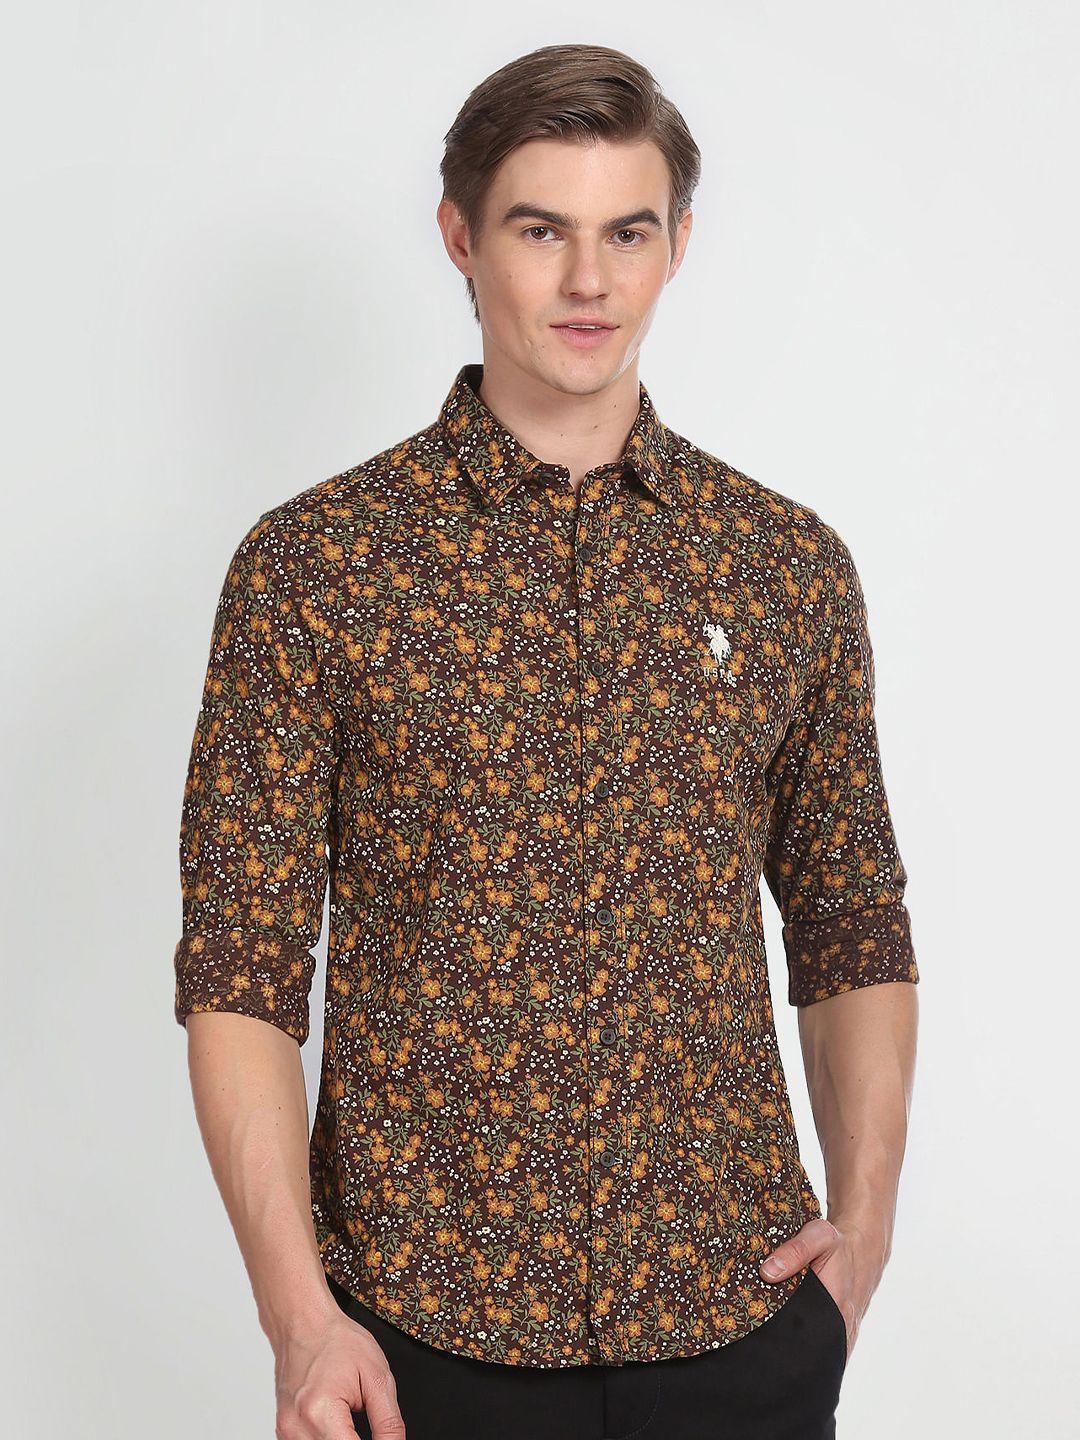 u.s. polo assn. denim co. slim fit floral opaque printed cotton casual shirt